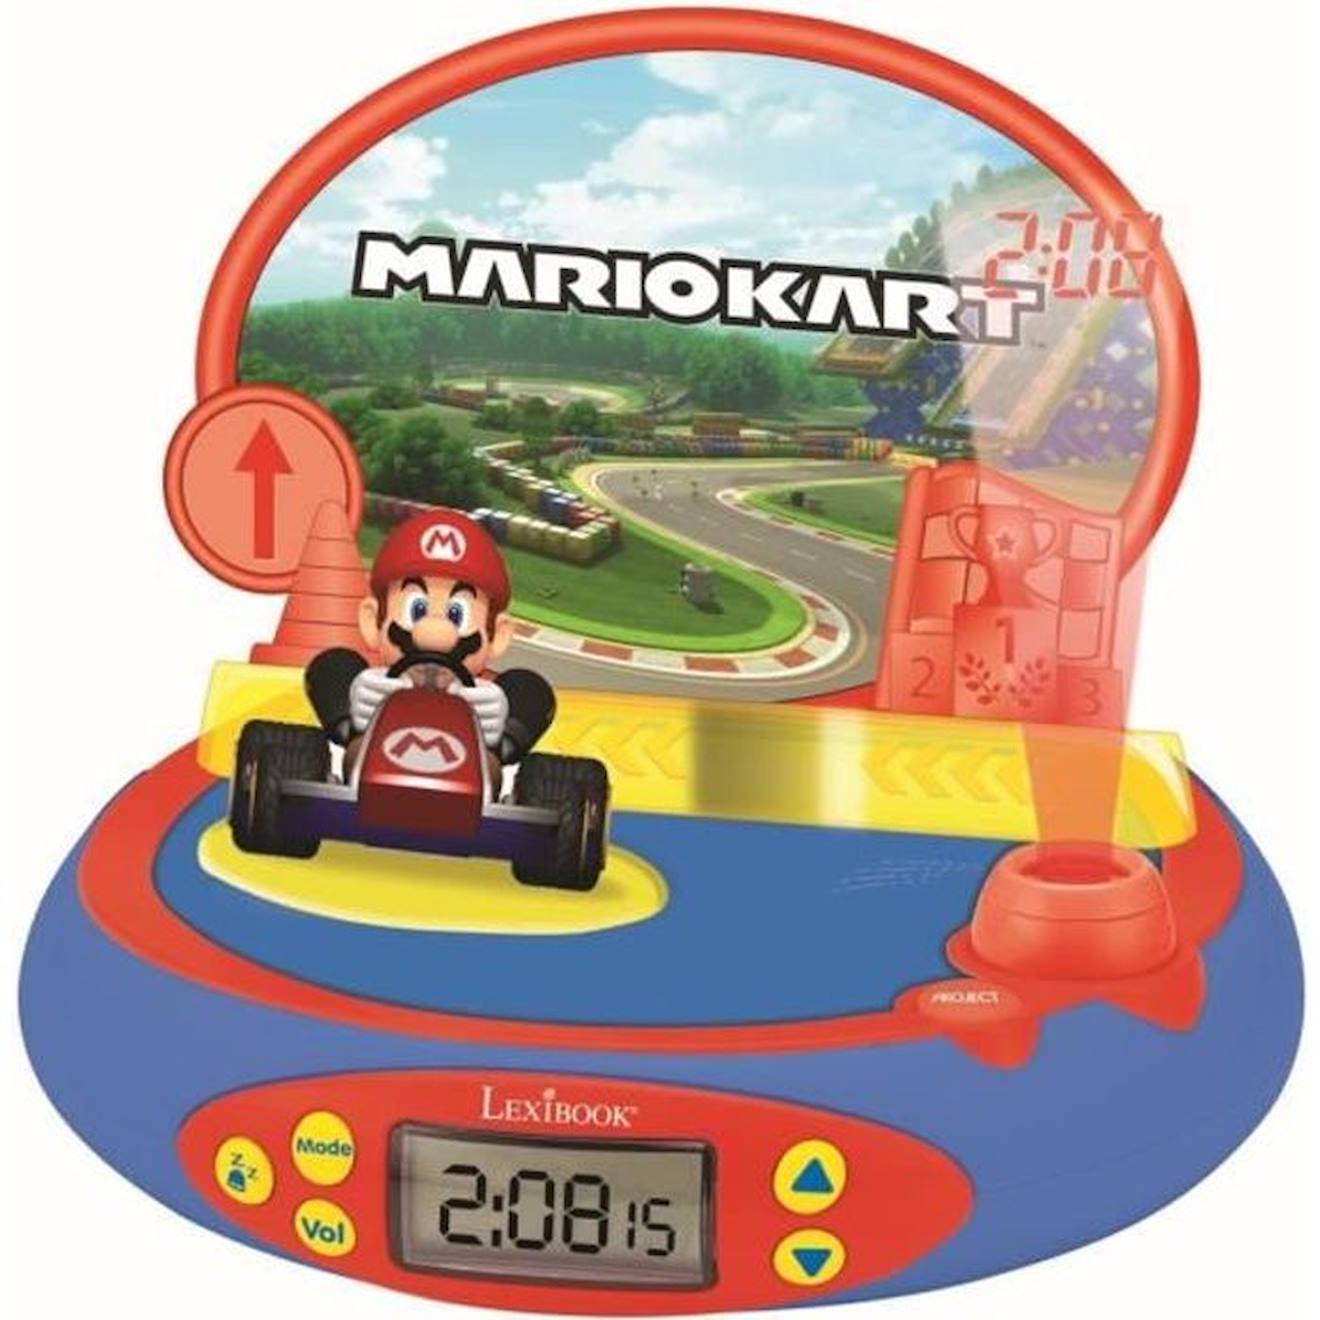 Mario Kart - Réveil Projecteur Avec Sons Du Jeu Vidéo Nintendo - Lexibook Bleu